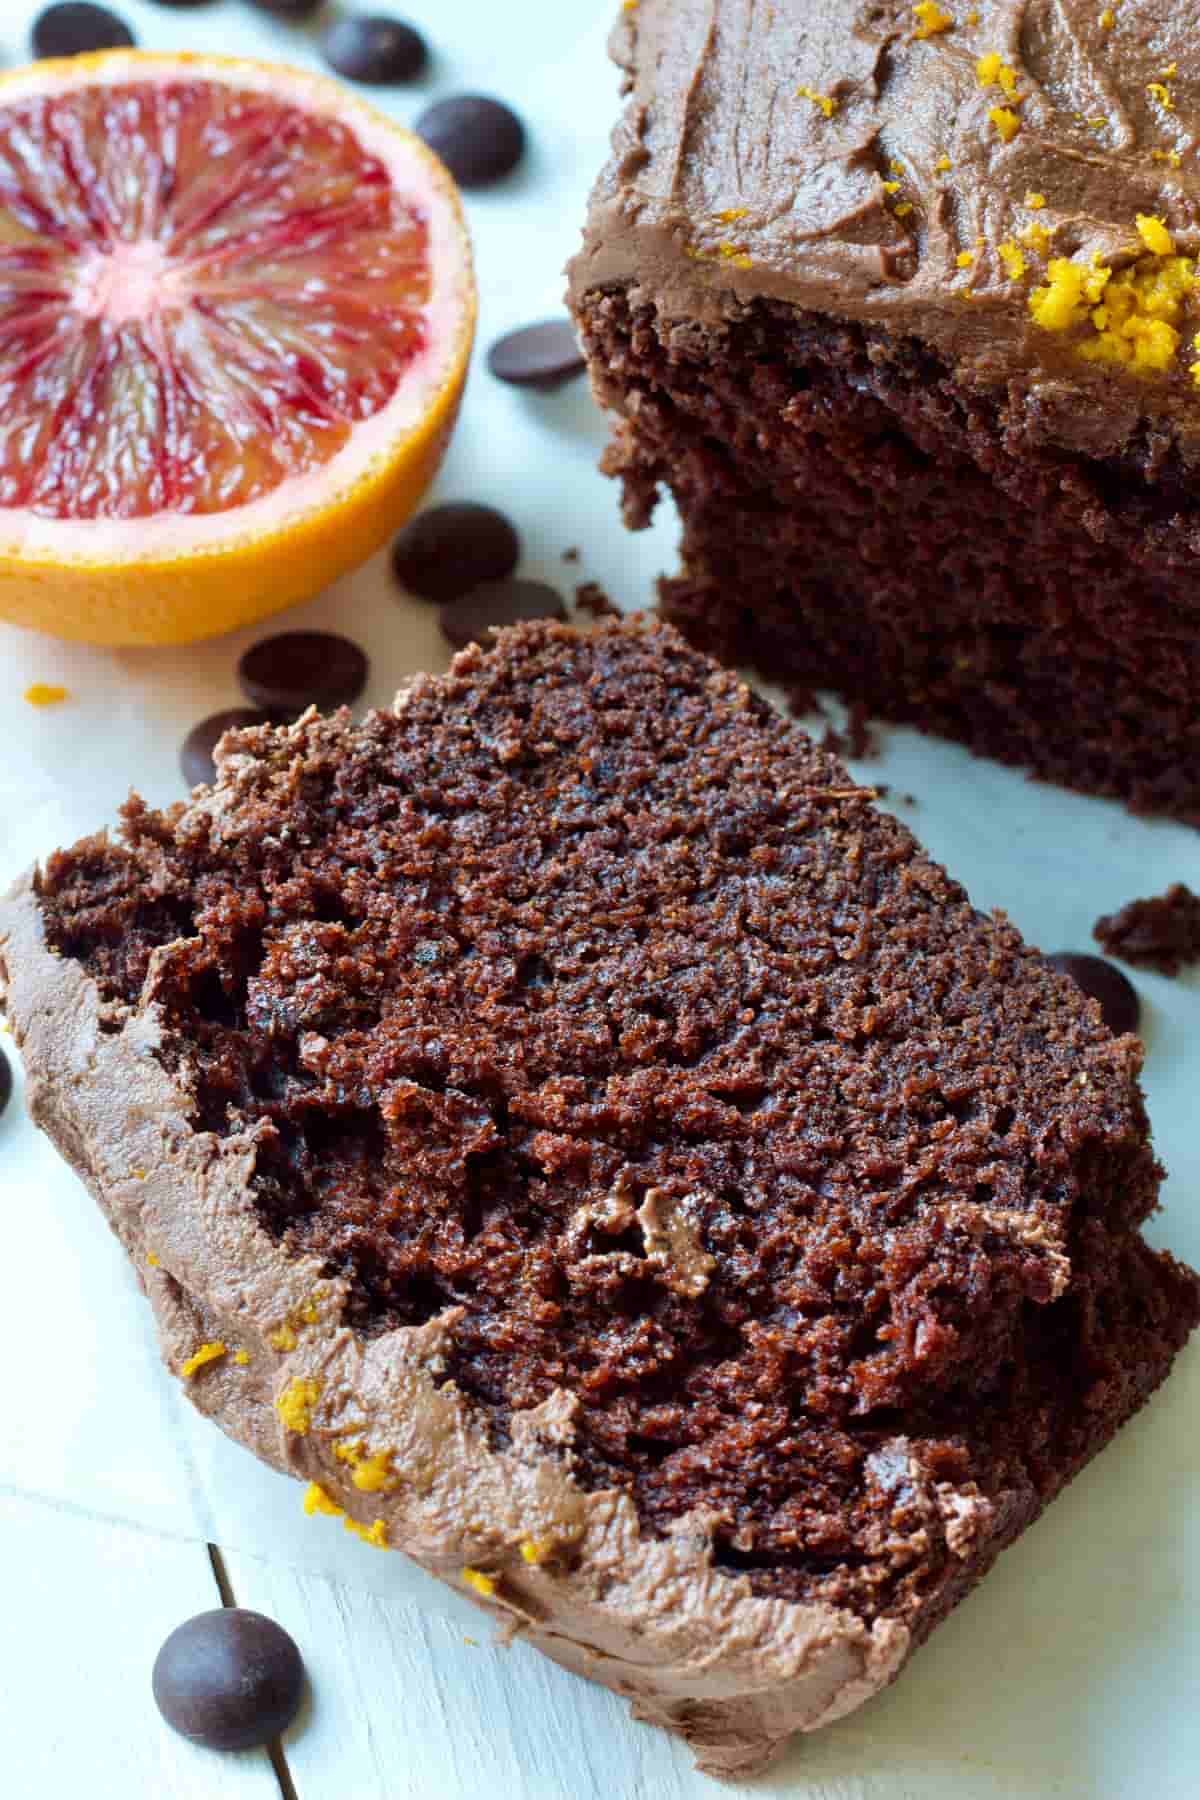 Slice of chocolate orange cake with orange half in the background.